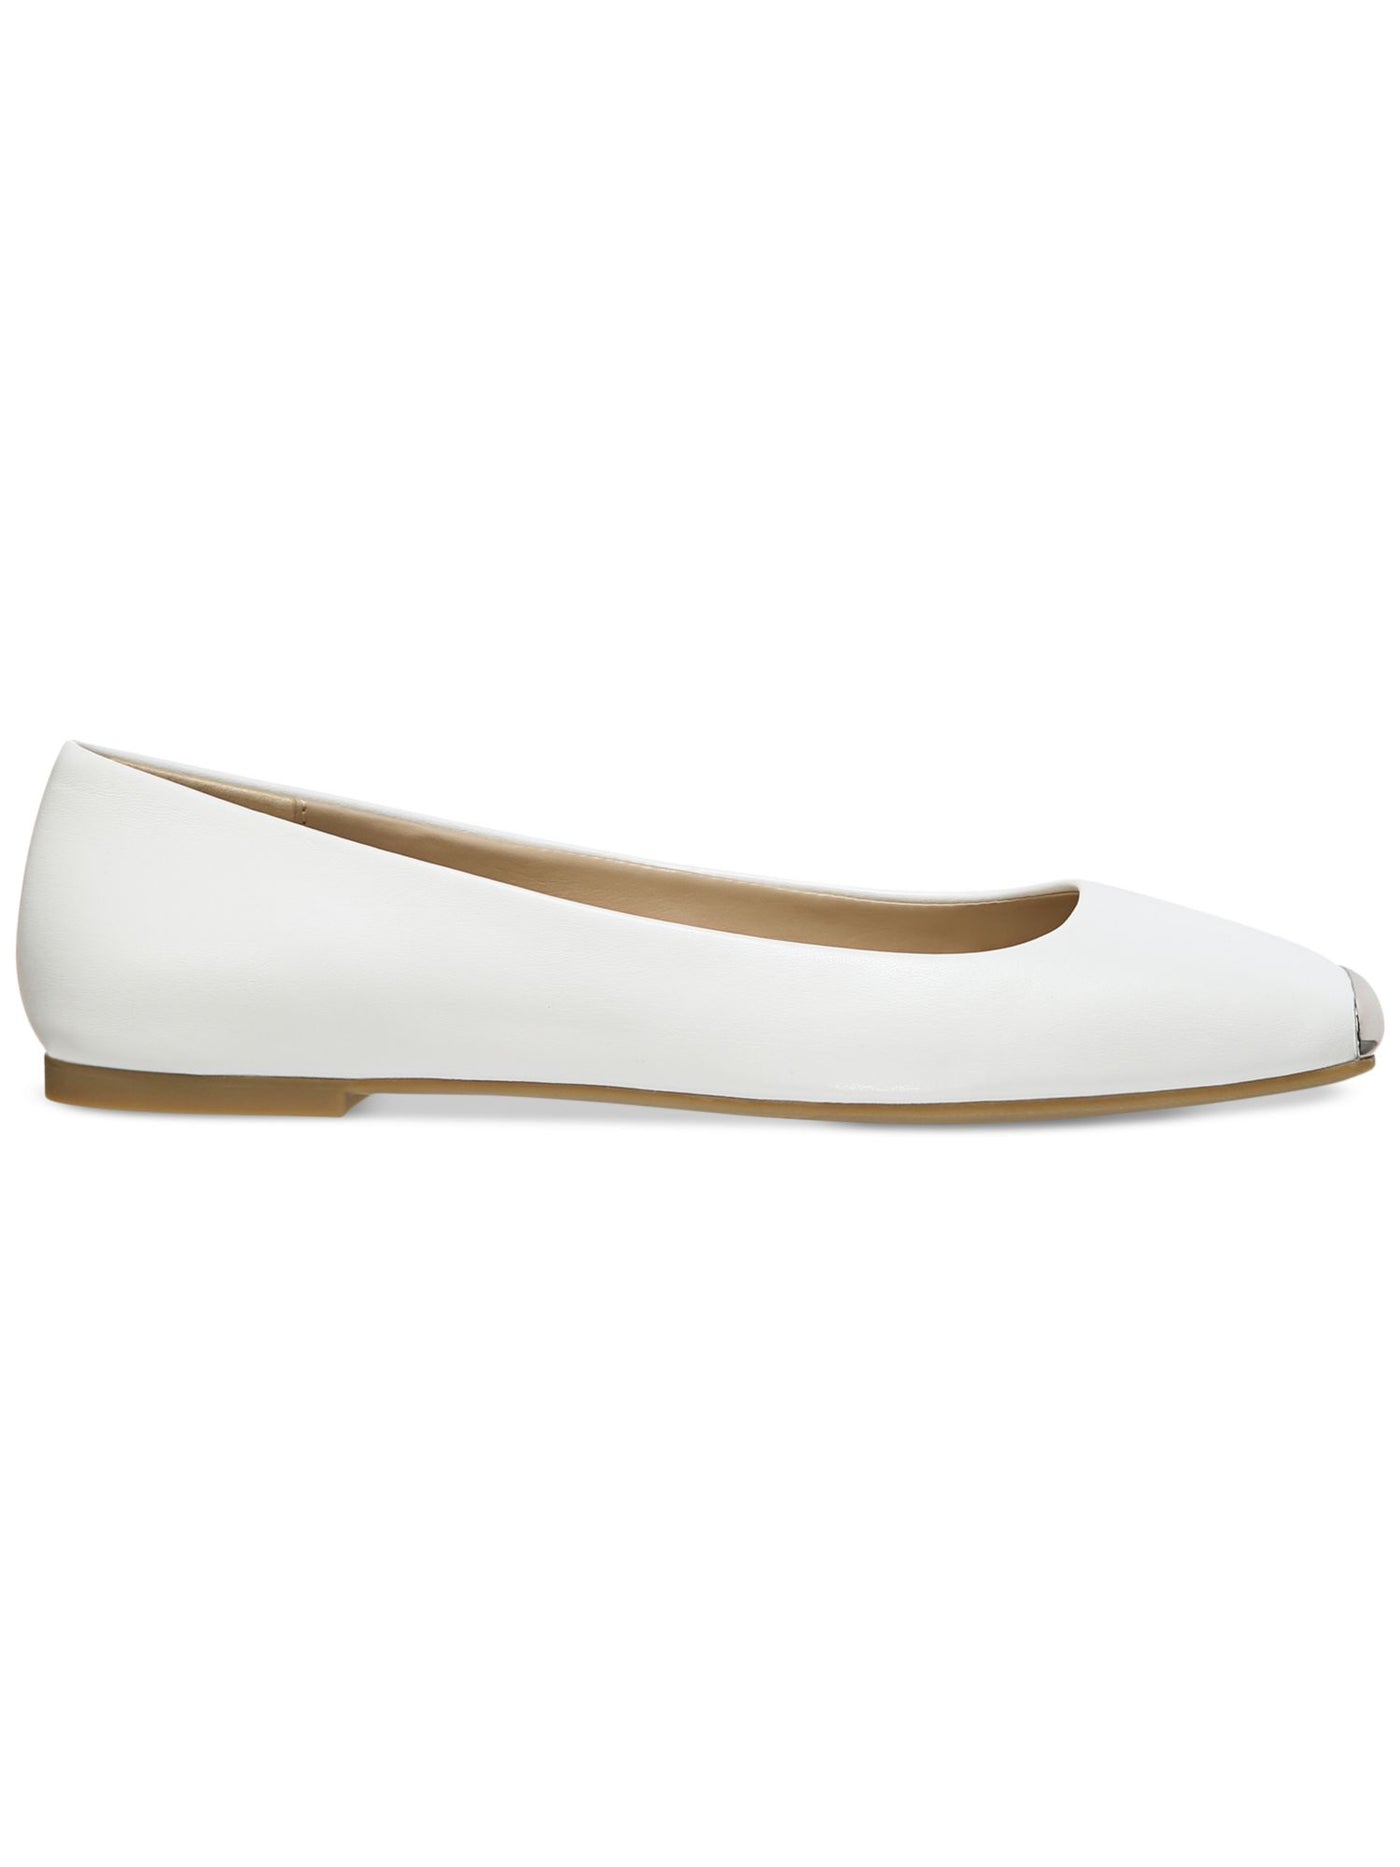 ALFANI Womens White Flexible Sole Padded Metallic Neptoon Square Toe Slip On Flats Shoes 6.5 M